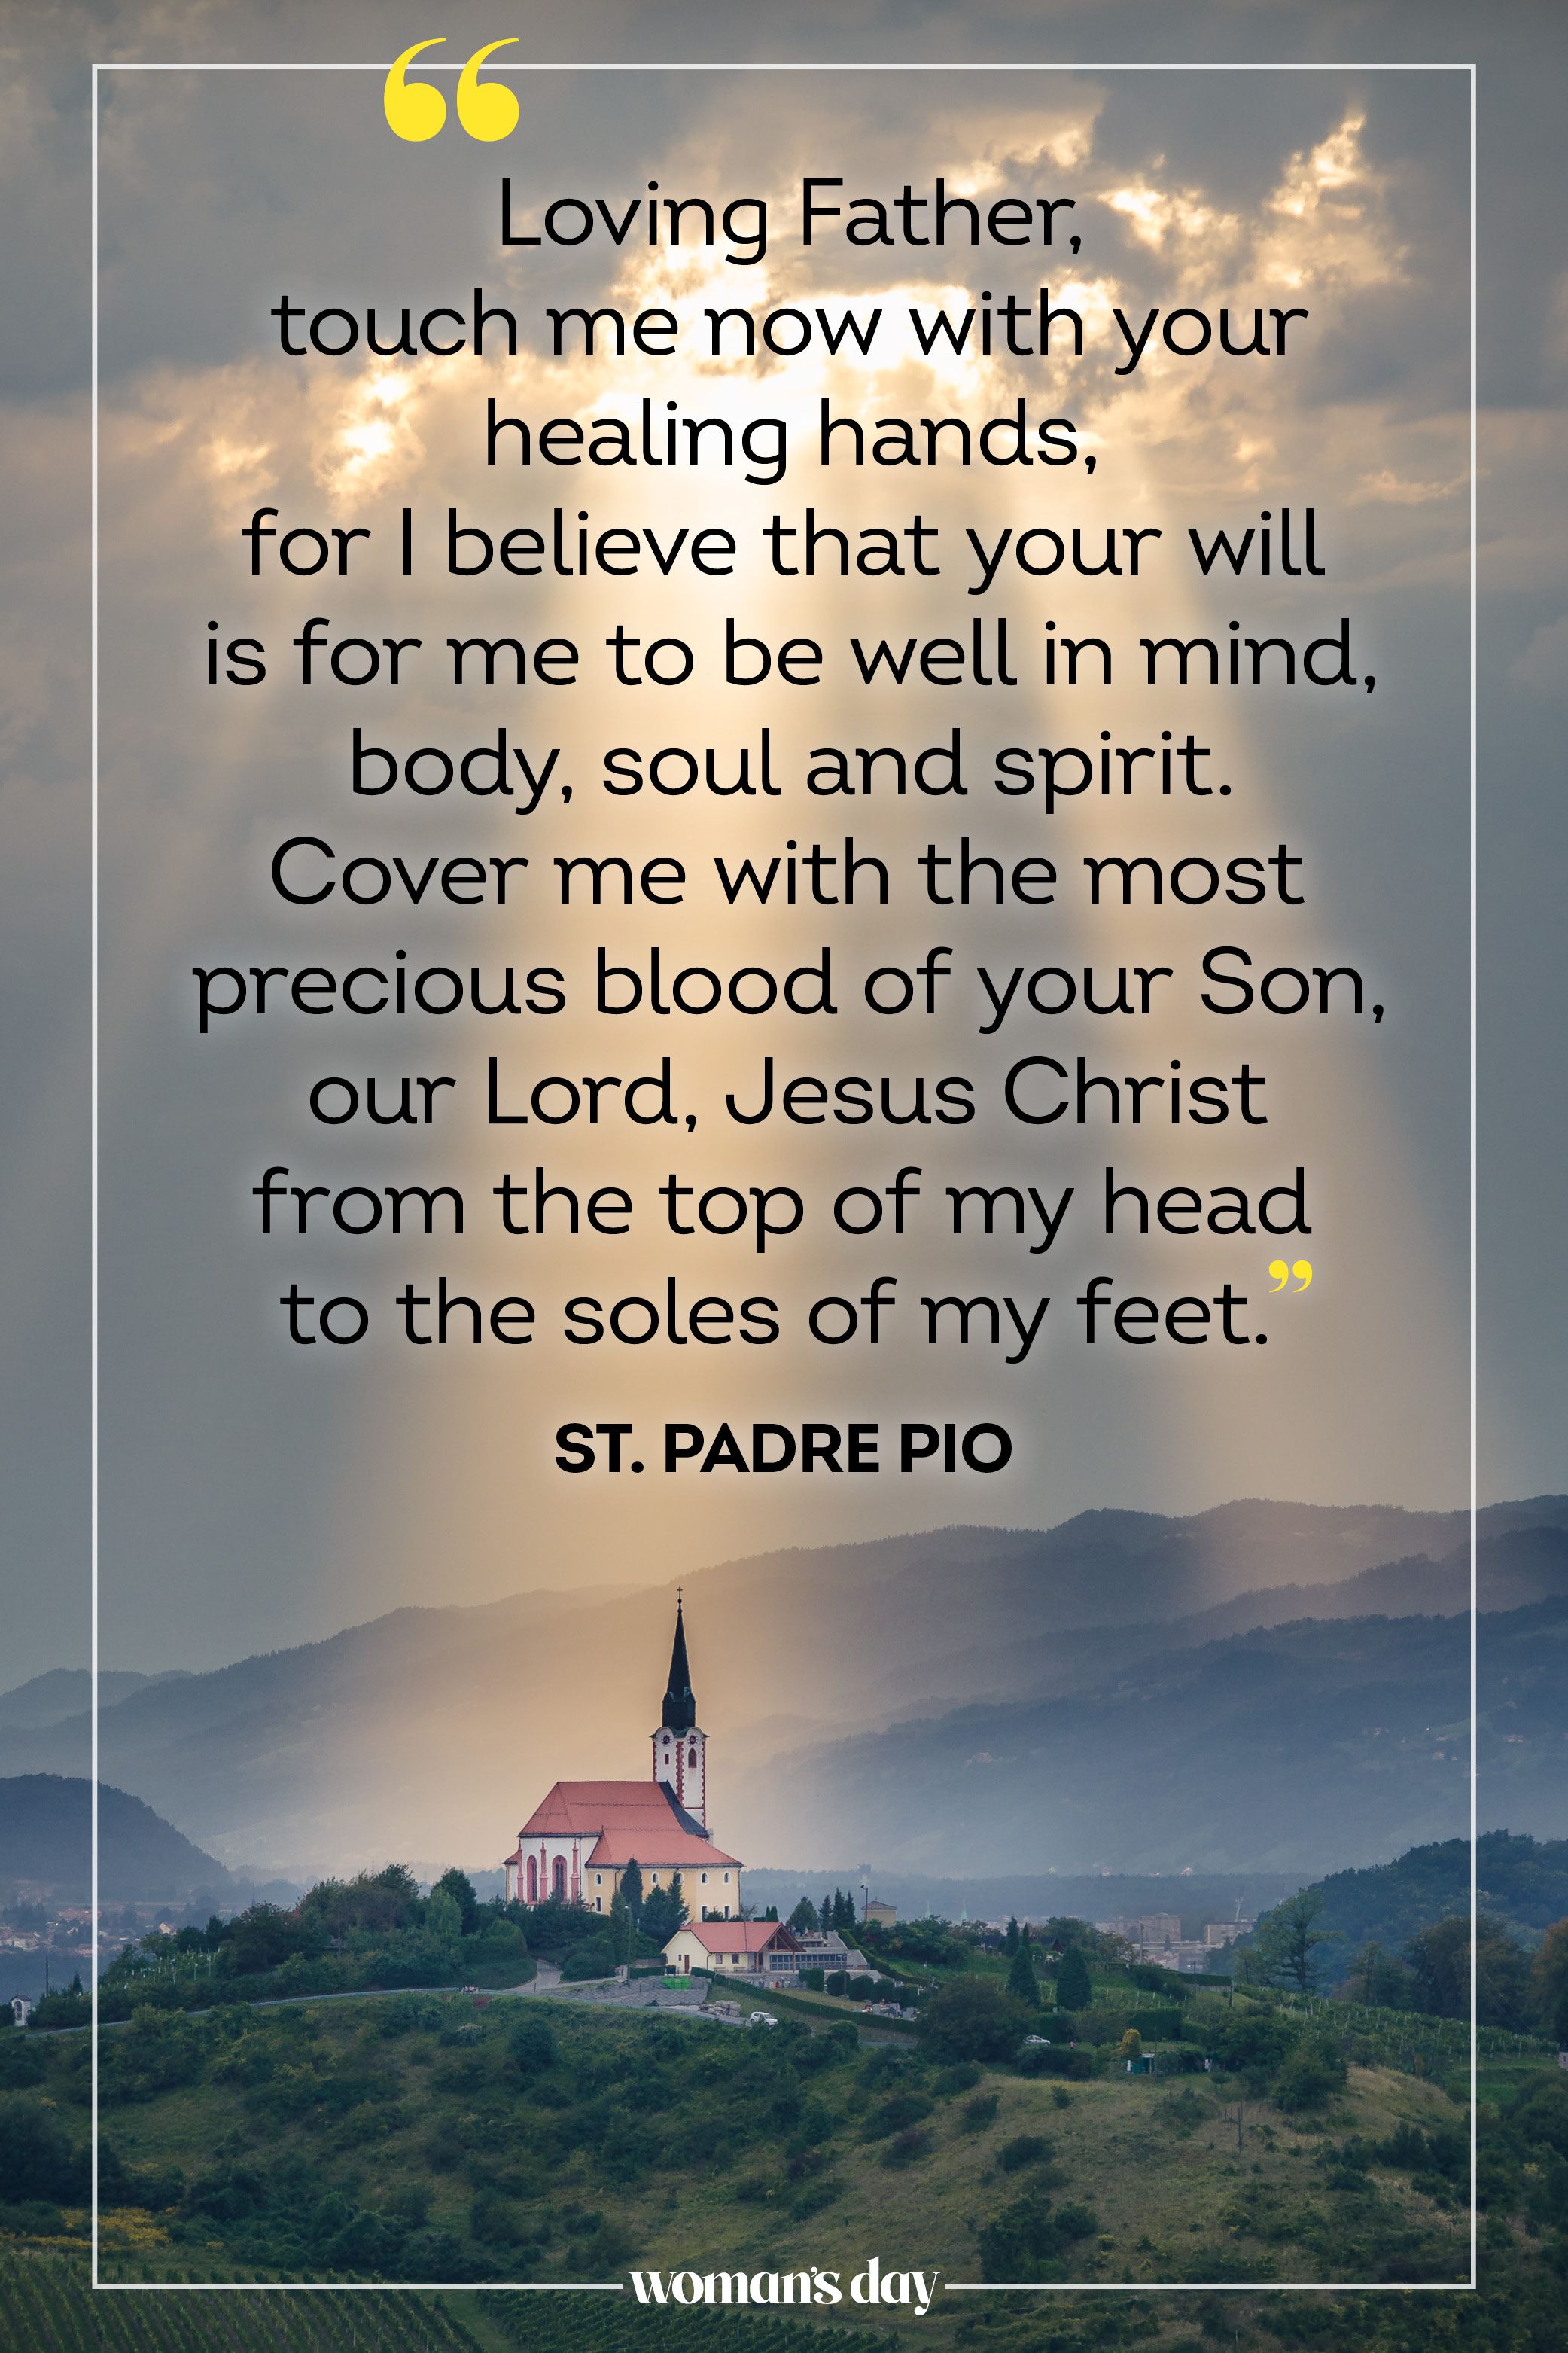 20 Powerful Prayers for Healing and Recovery - NurseBuff